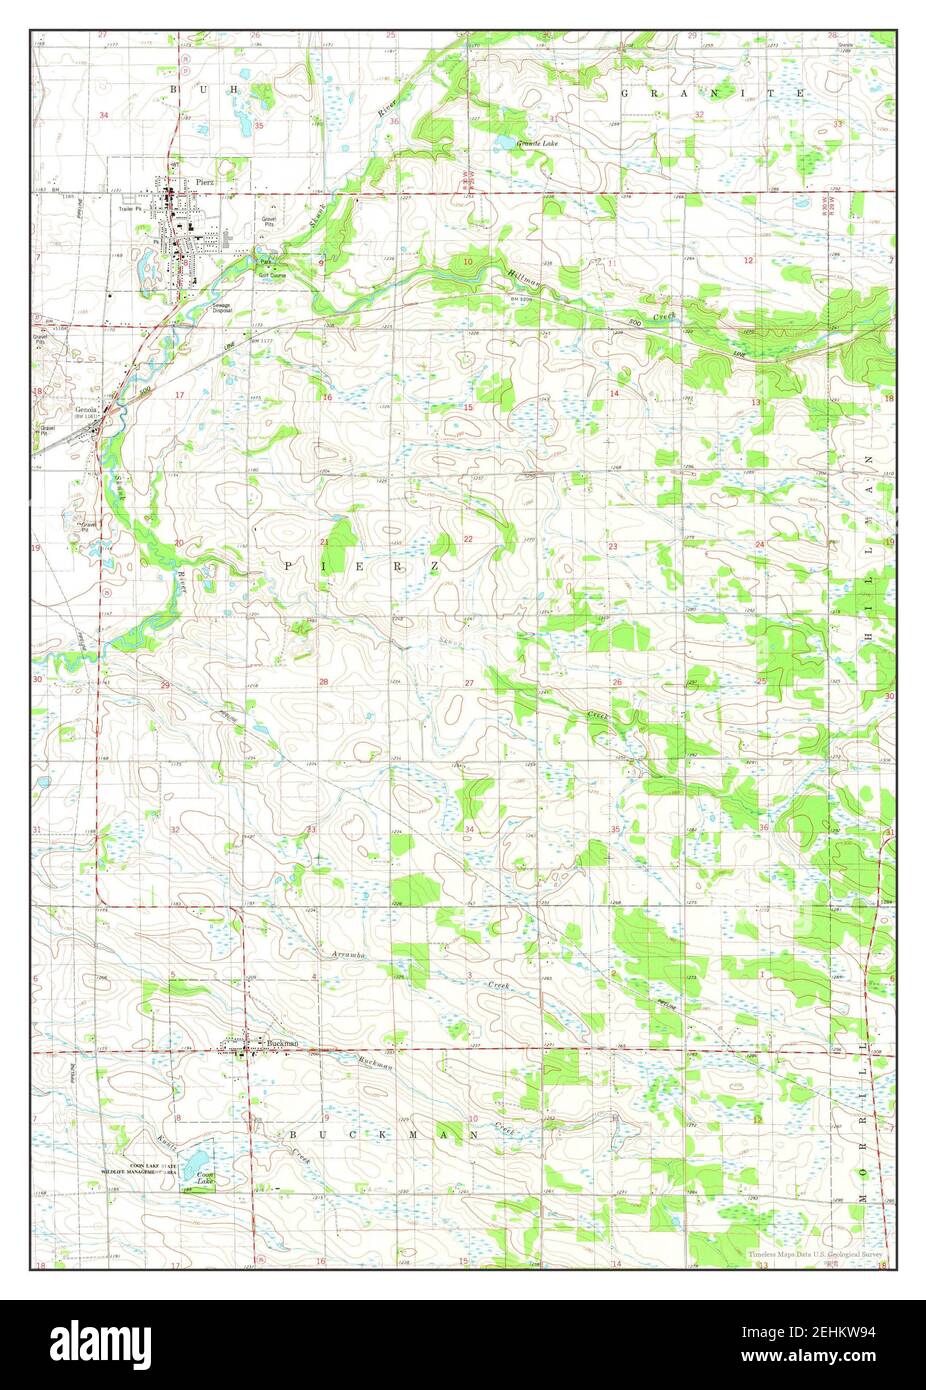 Pierz, Minnesota, map 1978, 1:24000, United States of America by Timeless Maps, data U.S. Geological Survey Stock Photo